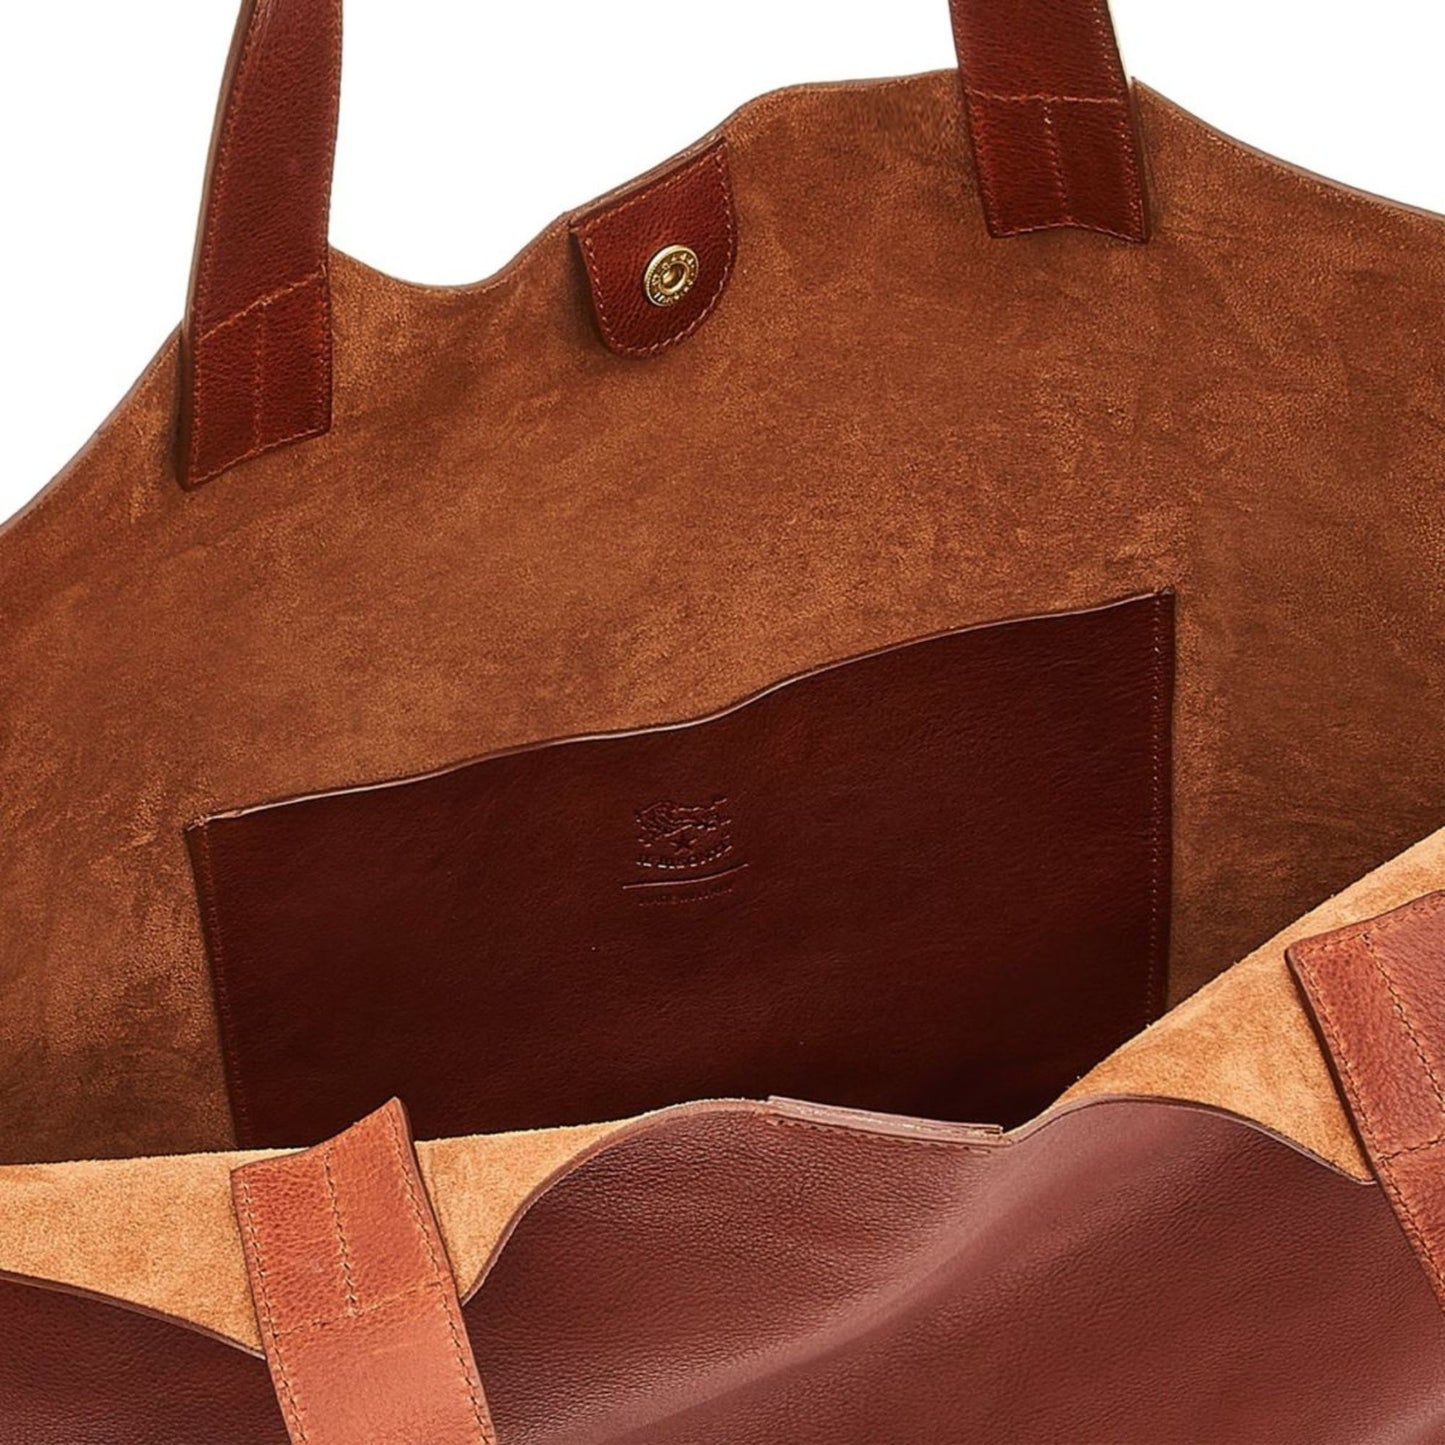 Il Bisonte Le Laudi Tote Bag in Vintage Leather Dark Brown Seppia